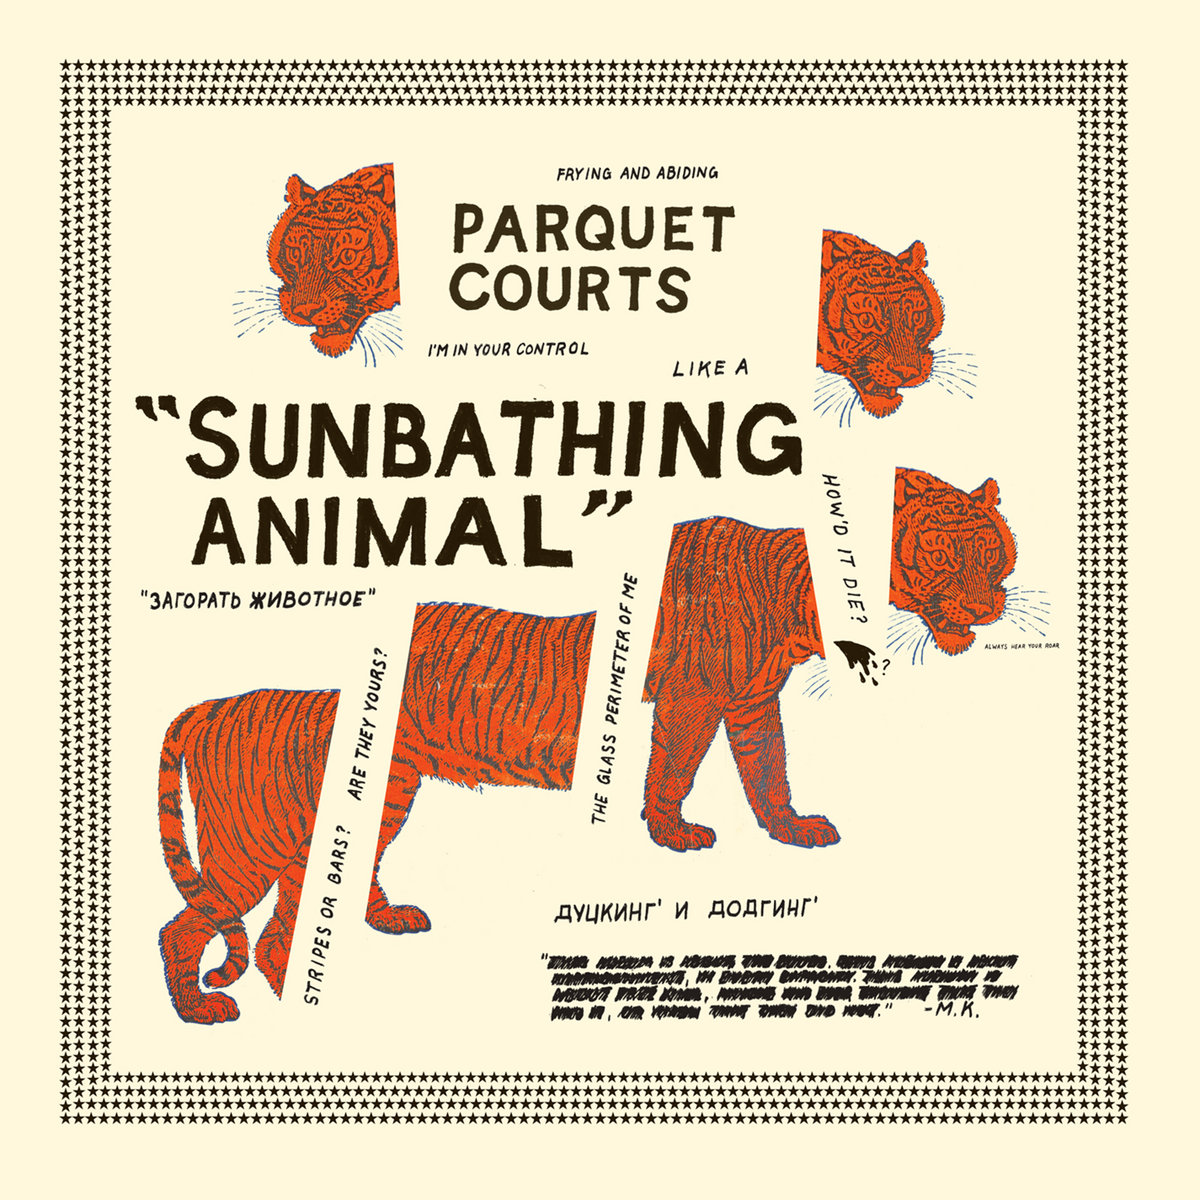 Parquet Courts "Sunbathing Animal" LP